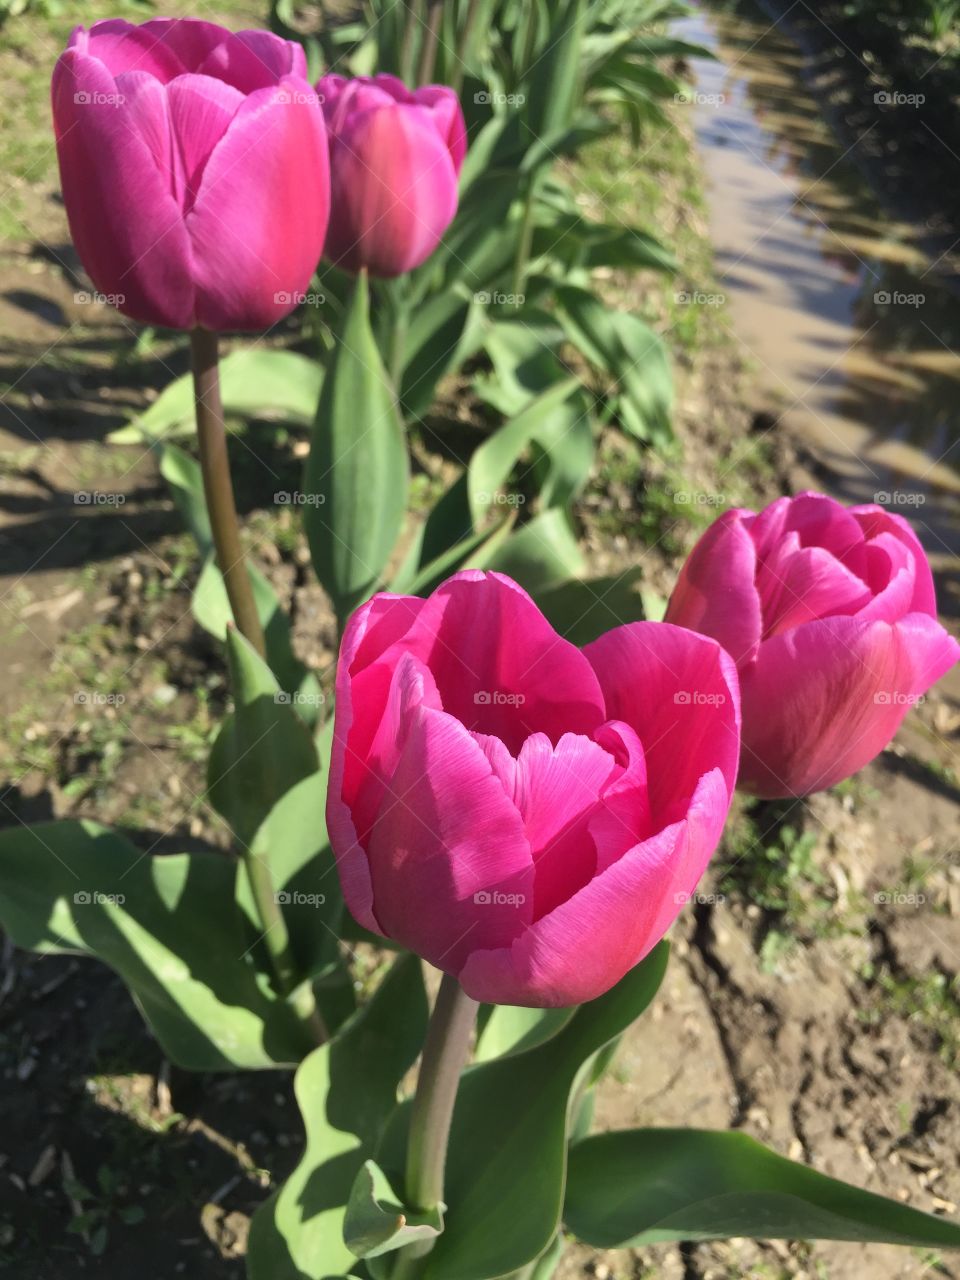 Tulips in bloom fuchsia hot pink purple